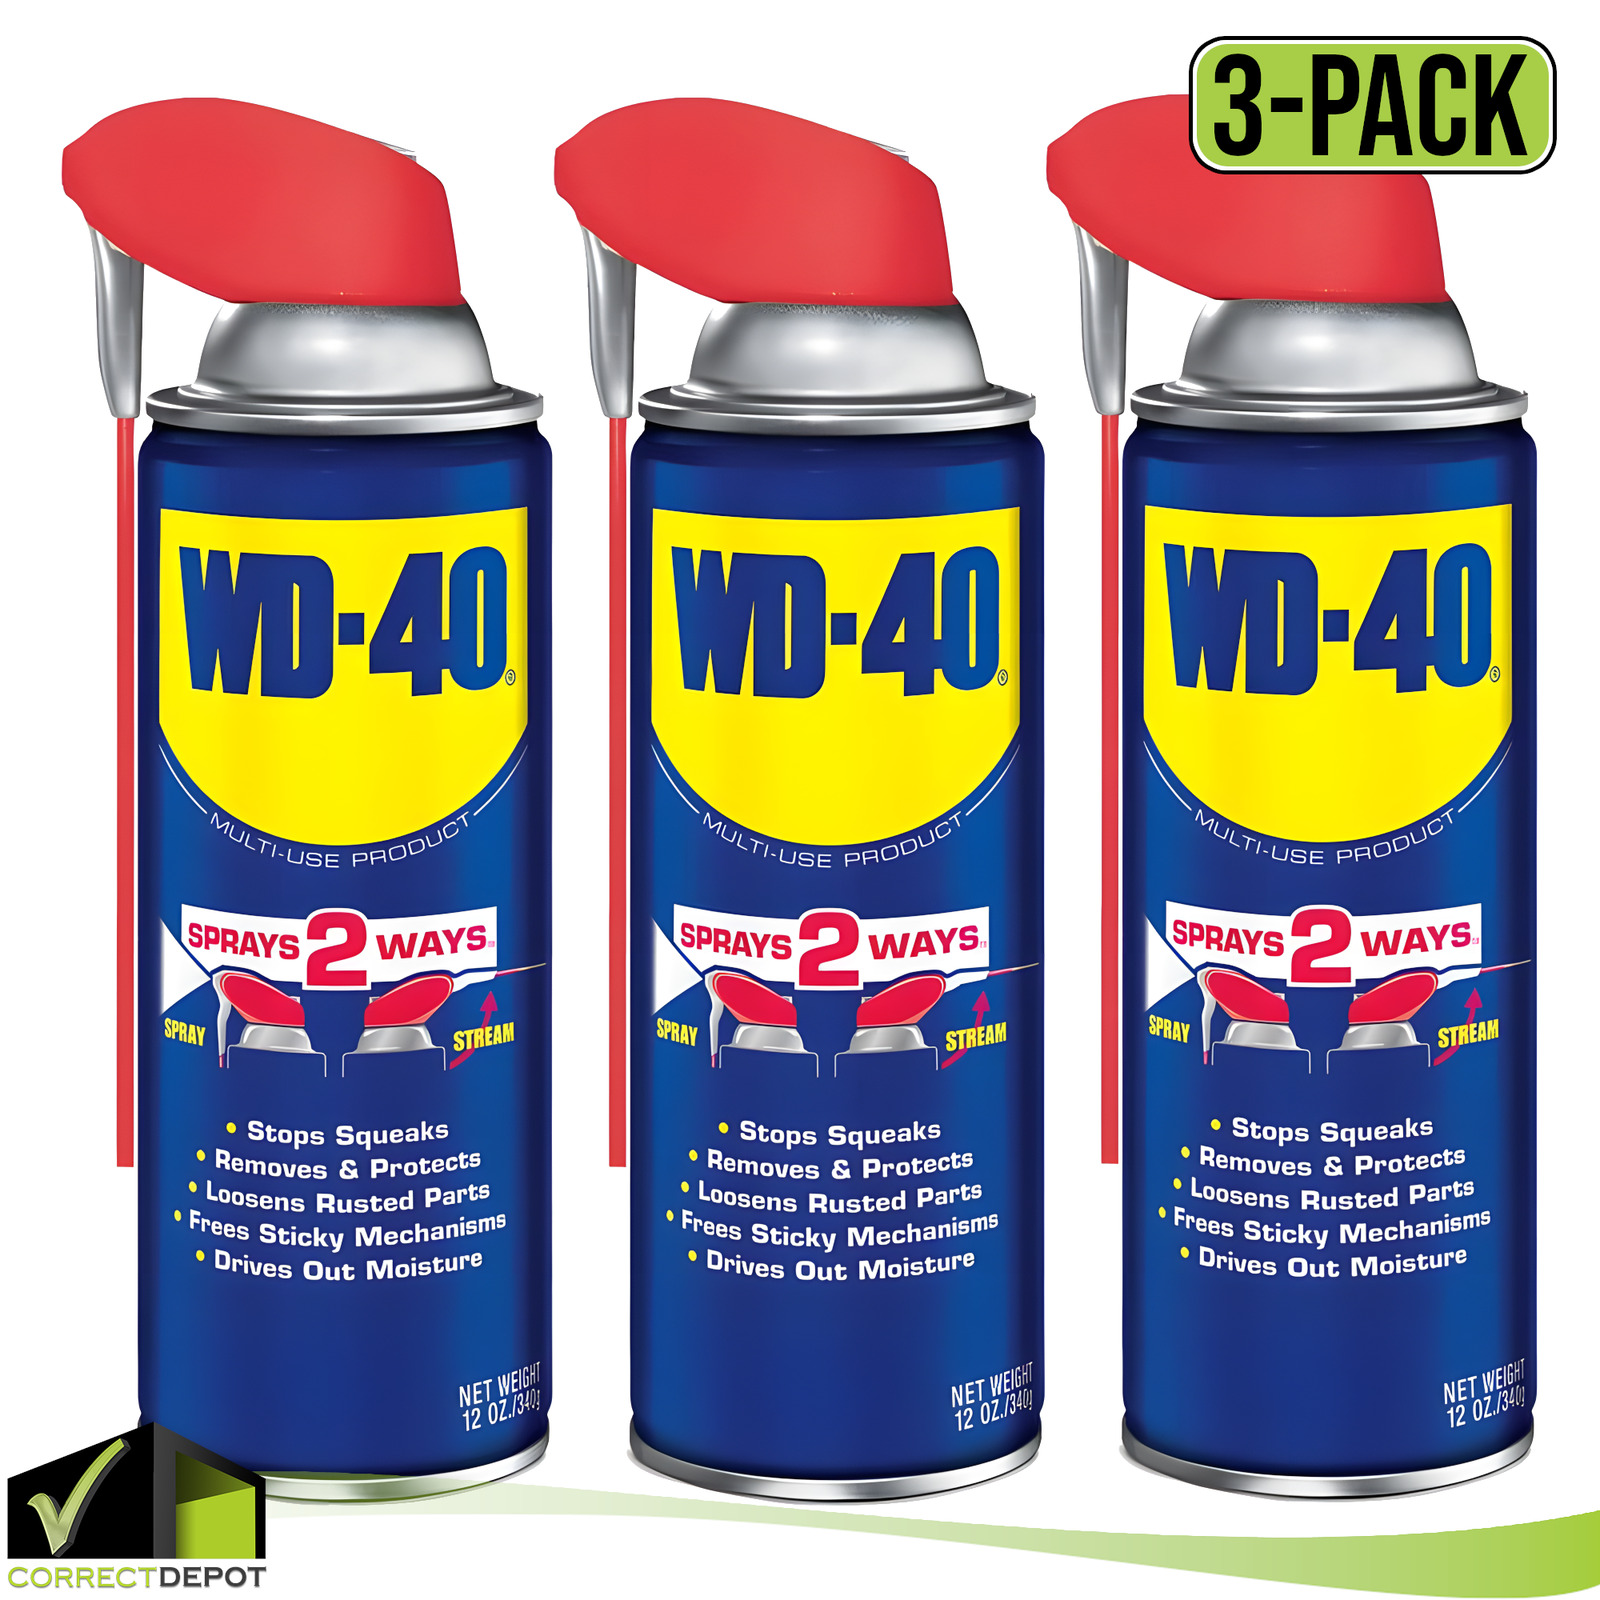 NEW Multi Purpose Original WD-40 Formula Lubricant Spray 3-PACK w/. Smart Straw